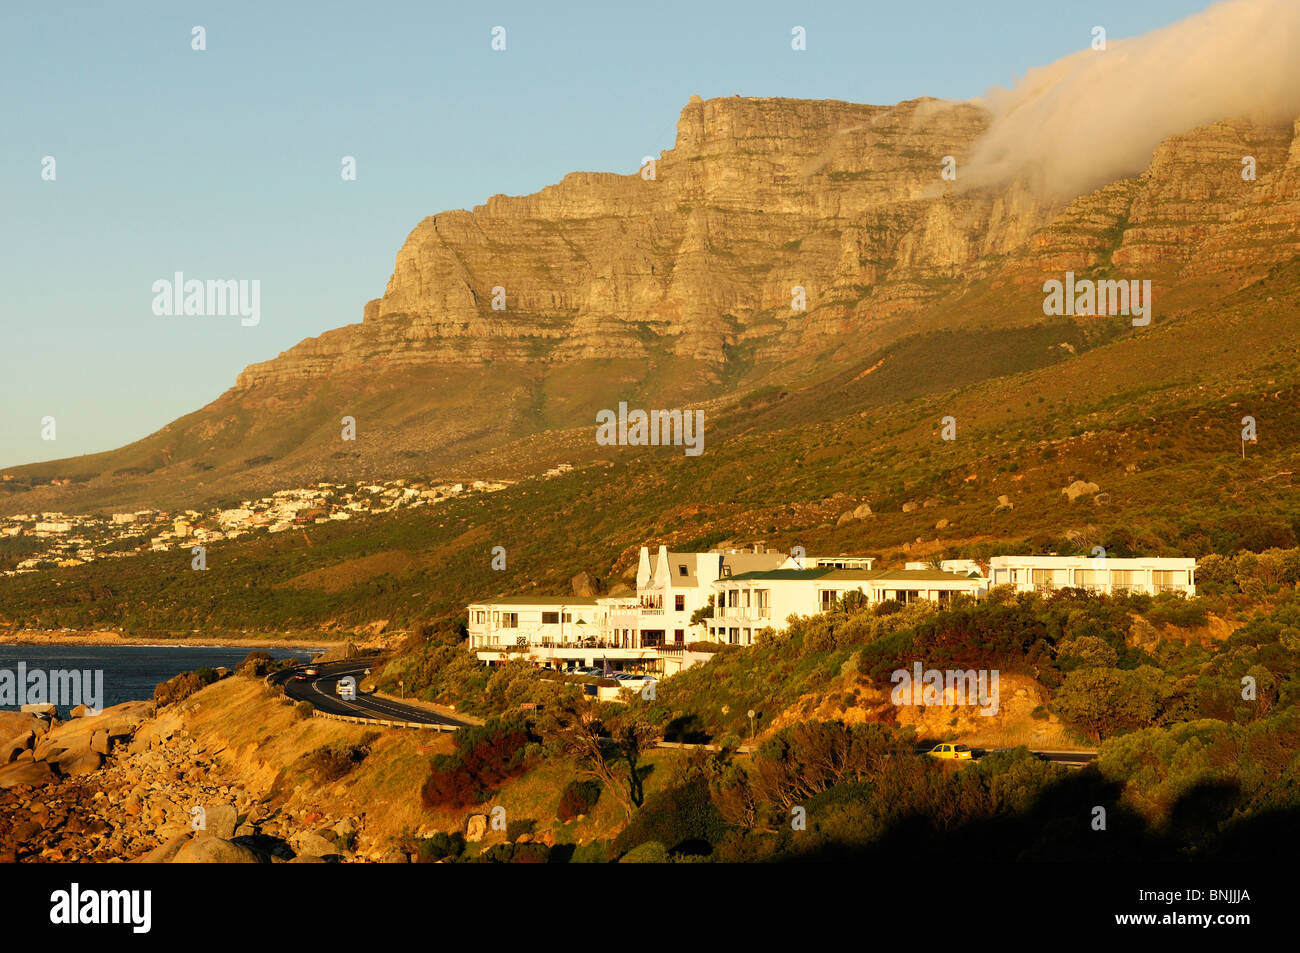 Zwölf Apostel Hotel Camps Bay Cape Peninsula Western Cape Südafrika Küste Ozean Meer Küste Landschaft Berge Stockfoto